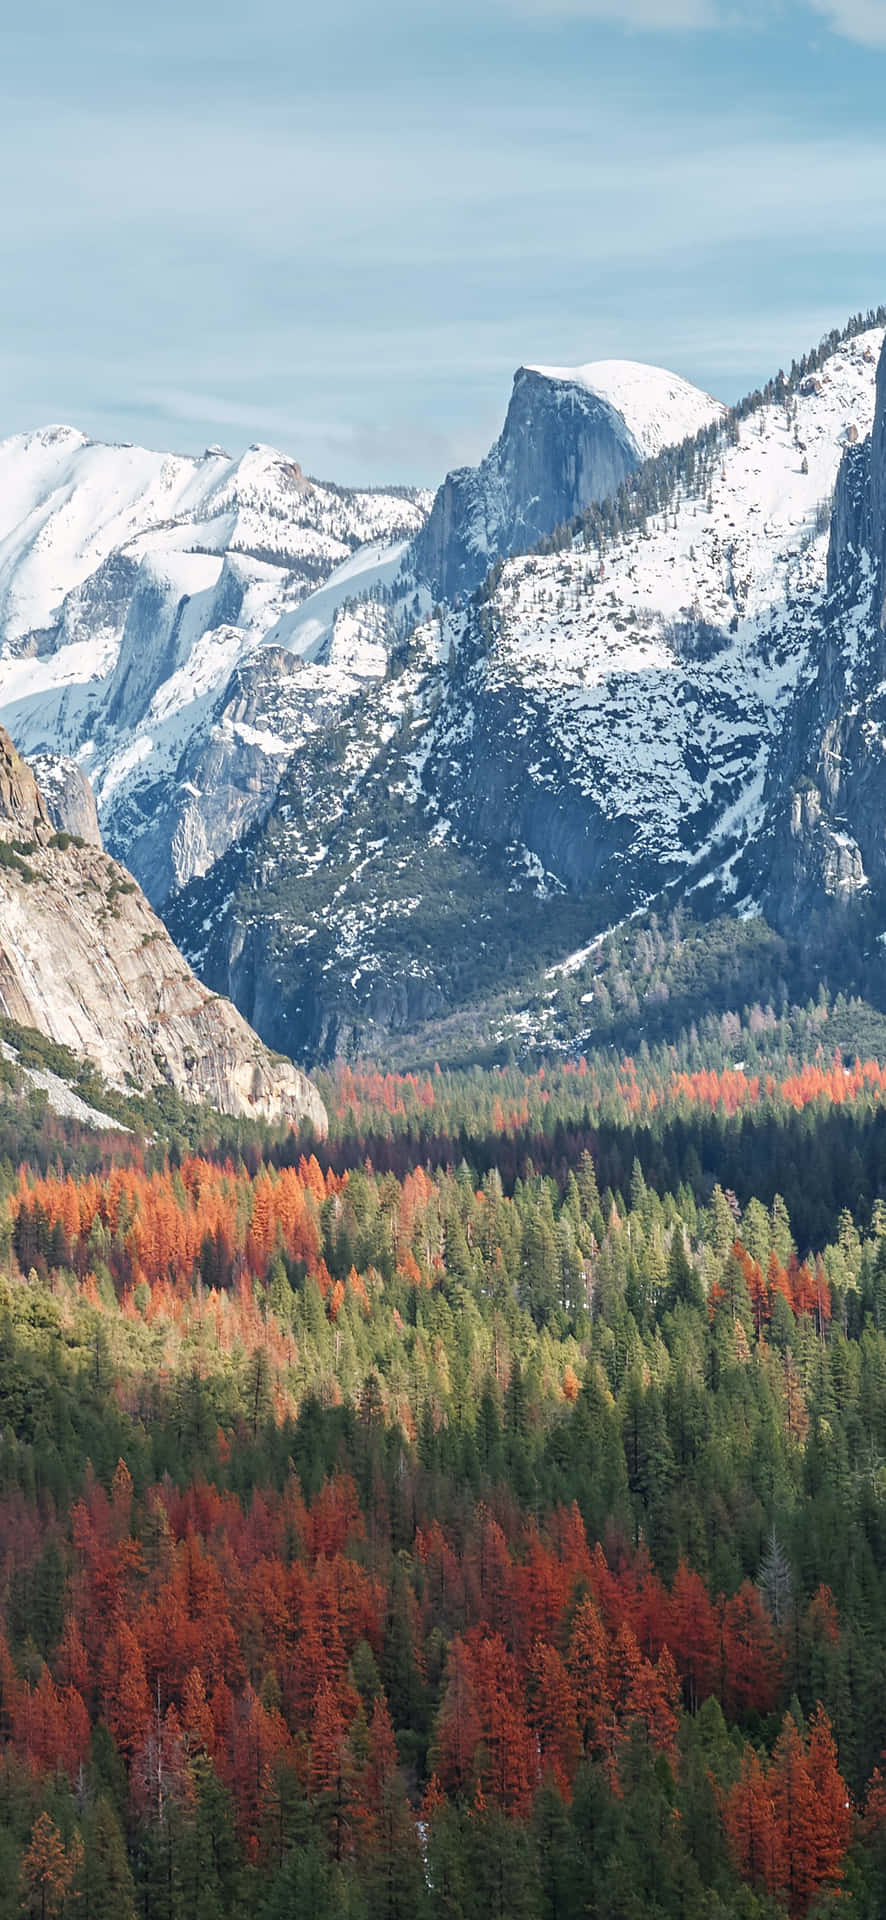 Stunning Fall Mountains in Colorful Autumn Splendor Wallpaper